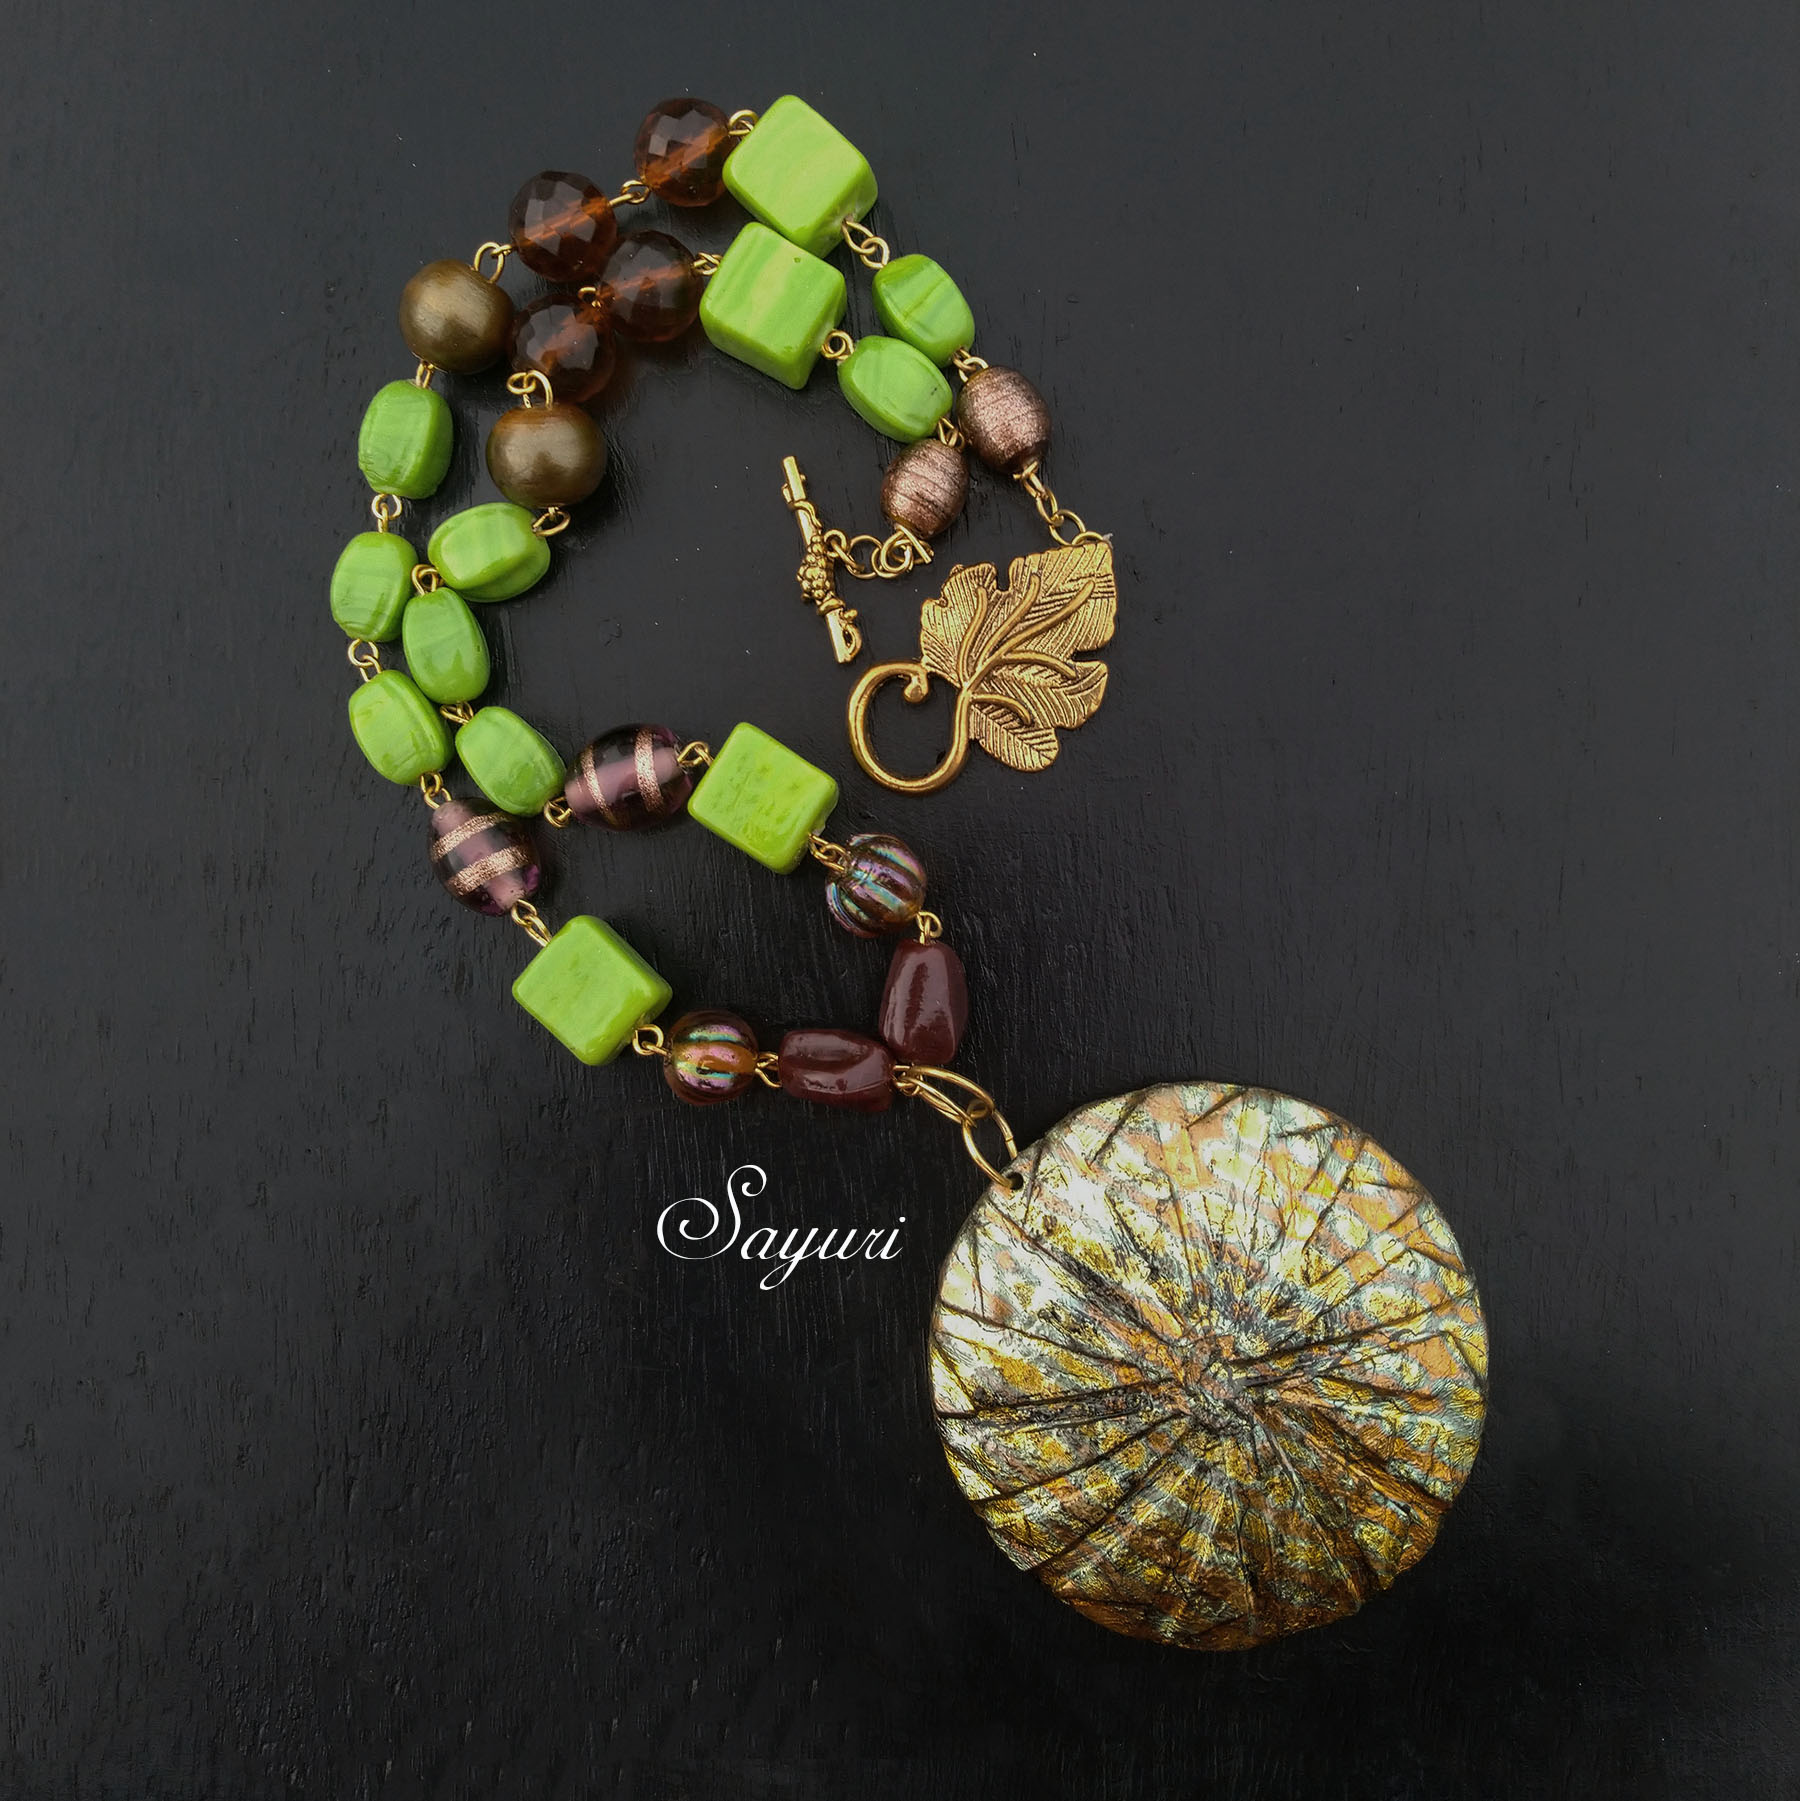 Mod and Mandala jewellery